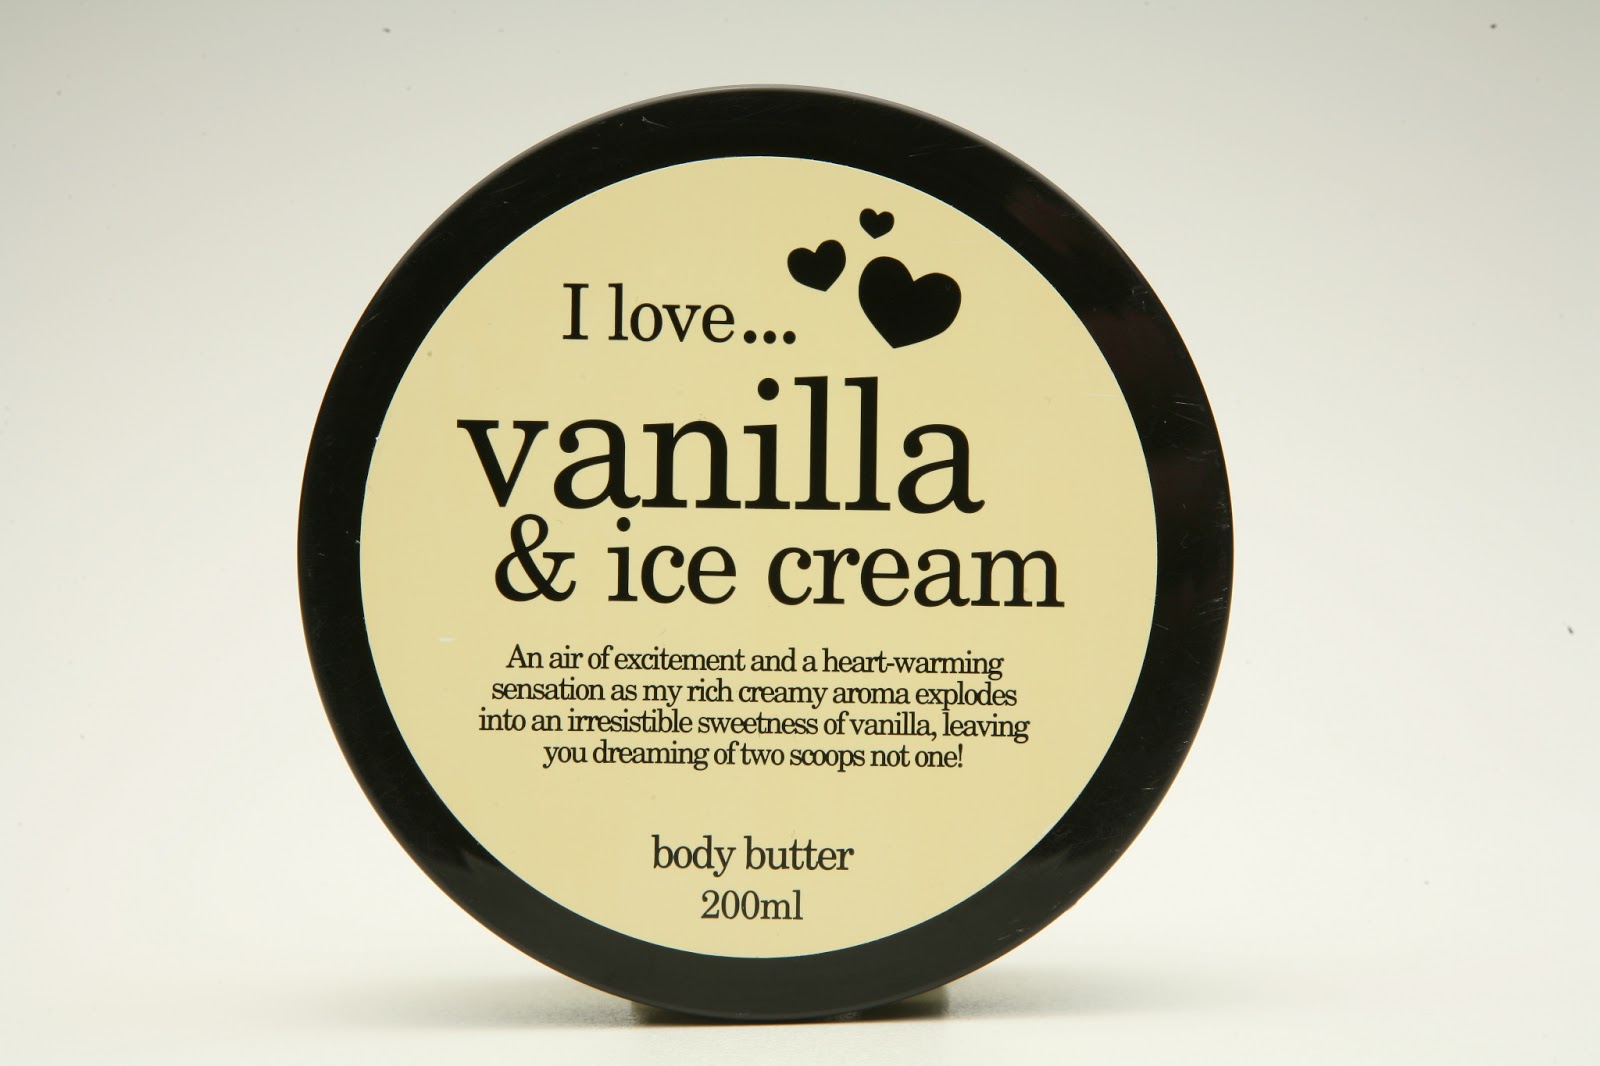 Косметика лов. Масло для тела - ваниль. Lovely косметика. Баттер для тела Vanilla. Для тела баттер ванильное мороженое.